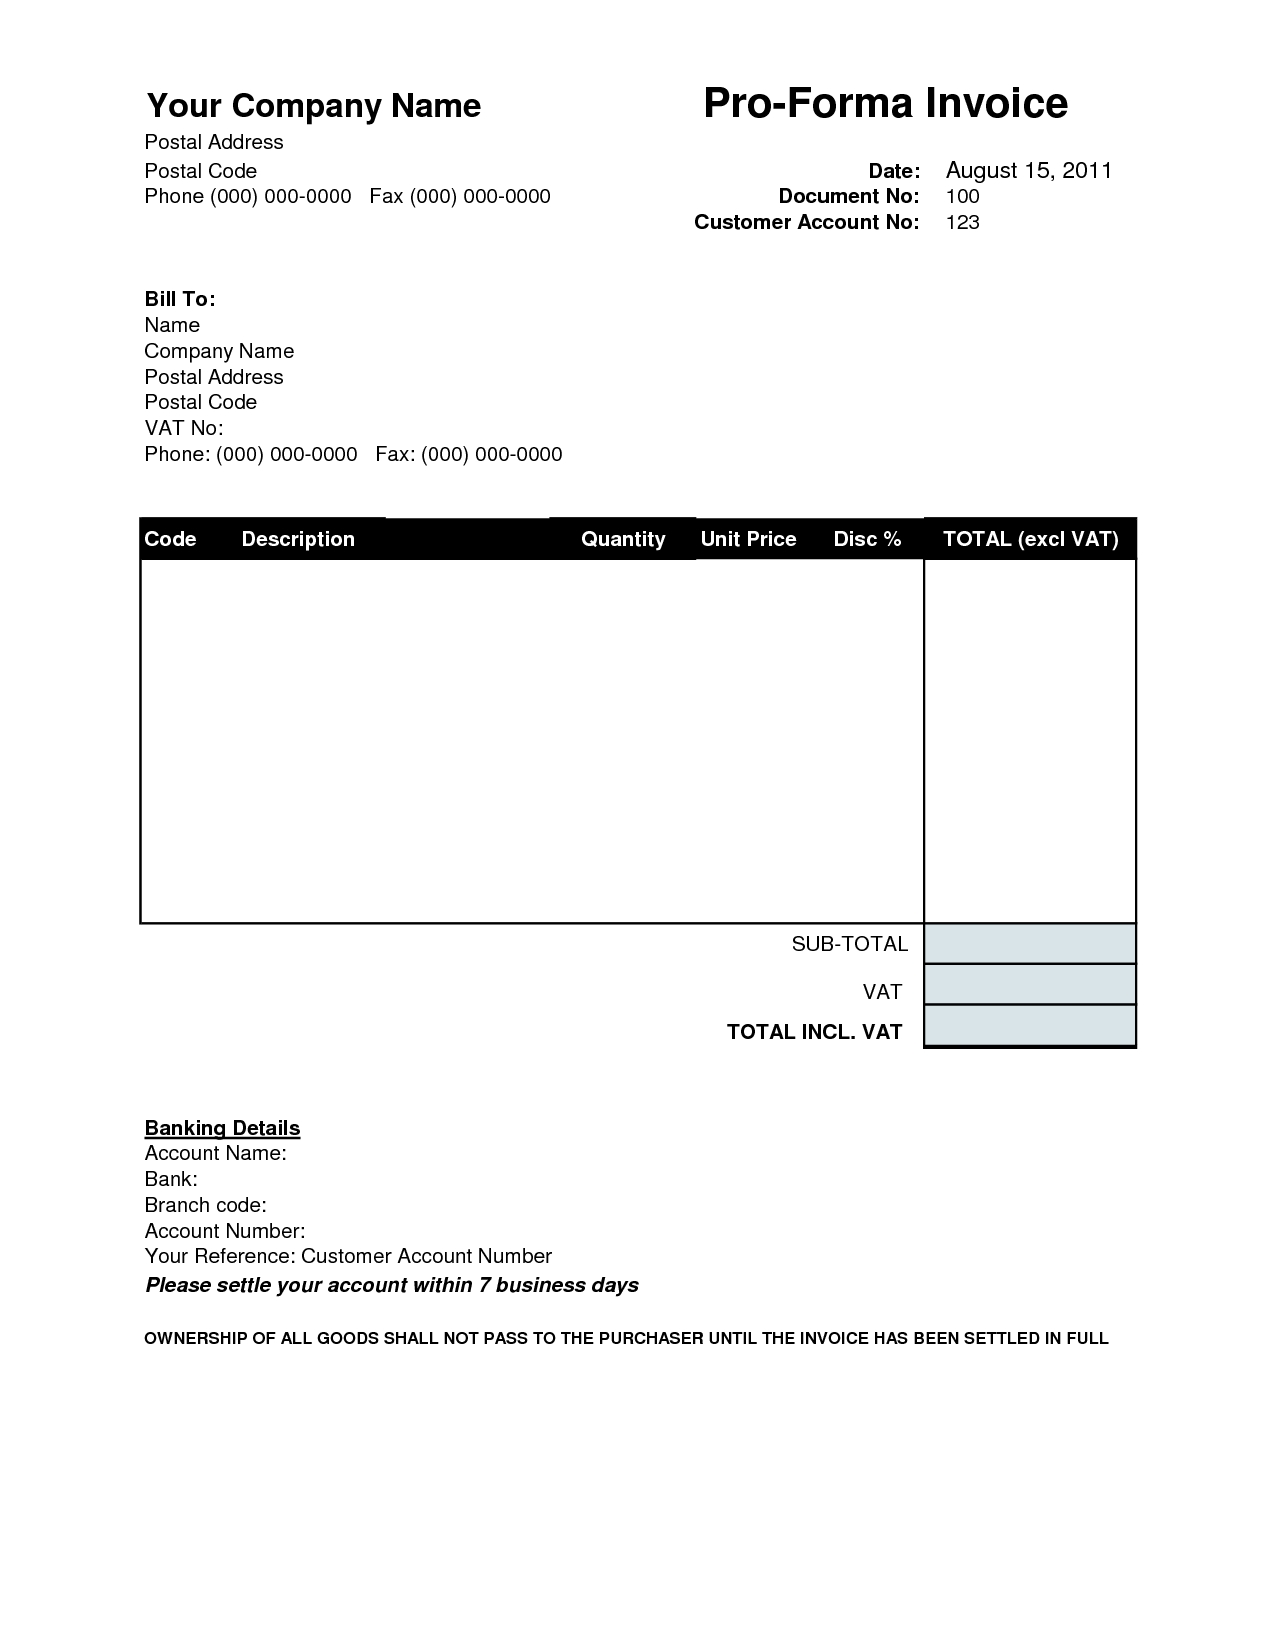 proforma invoice sample pro forma invoice free business template 1275 X 1650